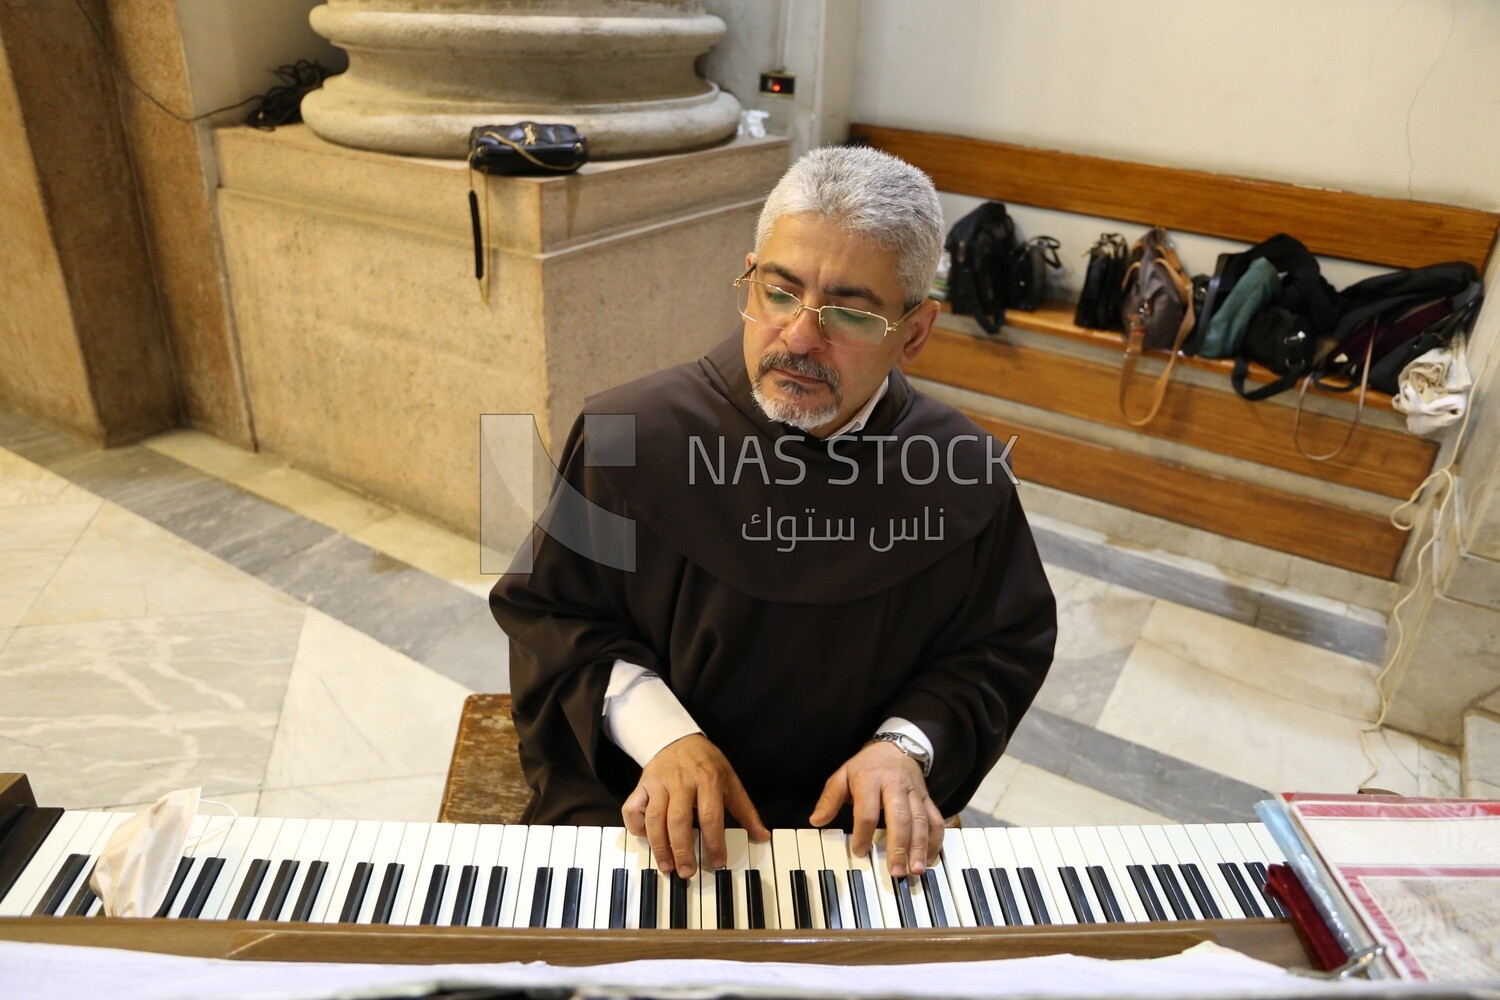 Pianist plays a hymn inside the church